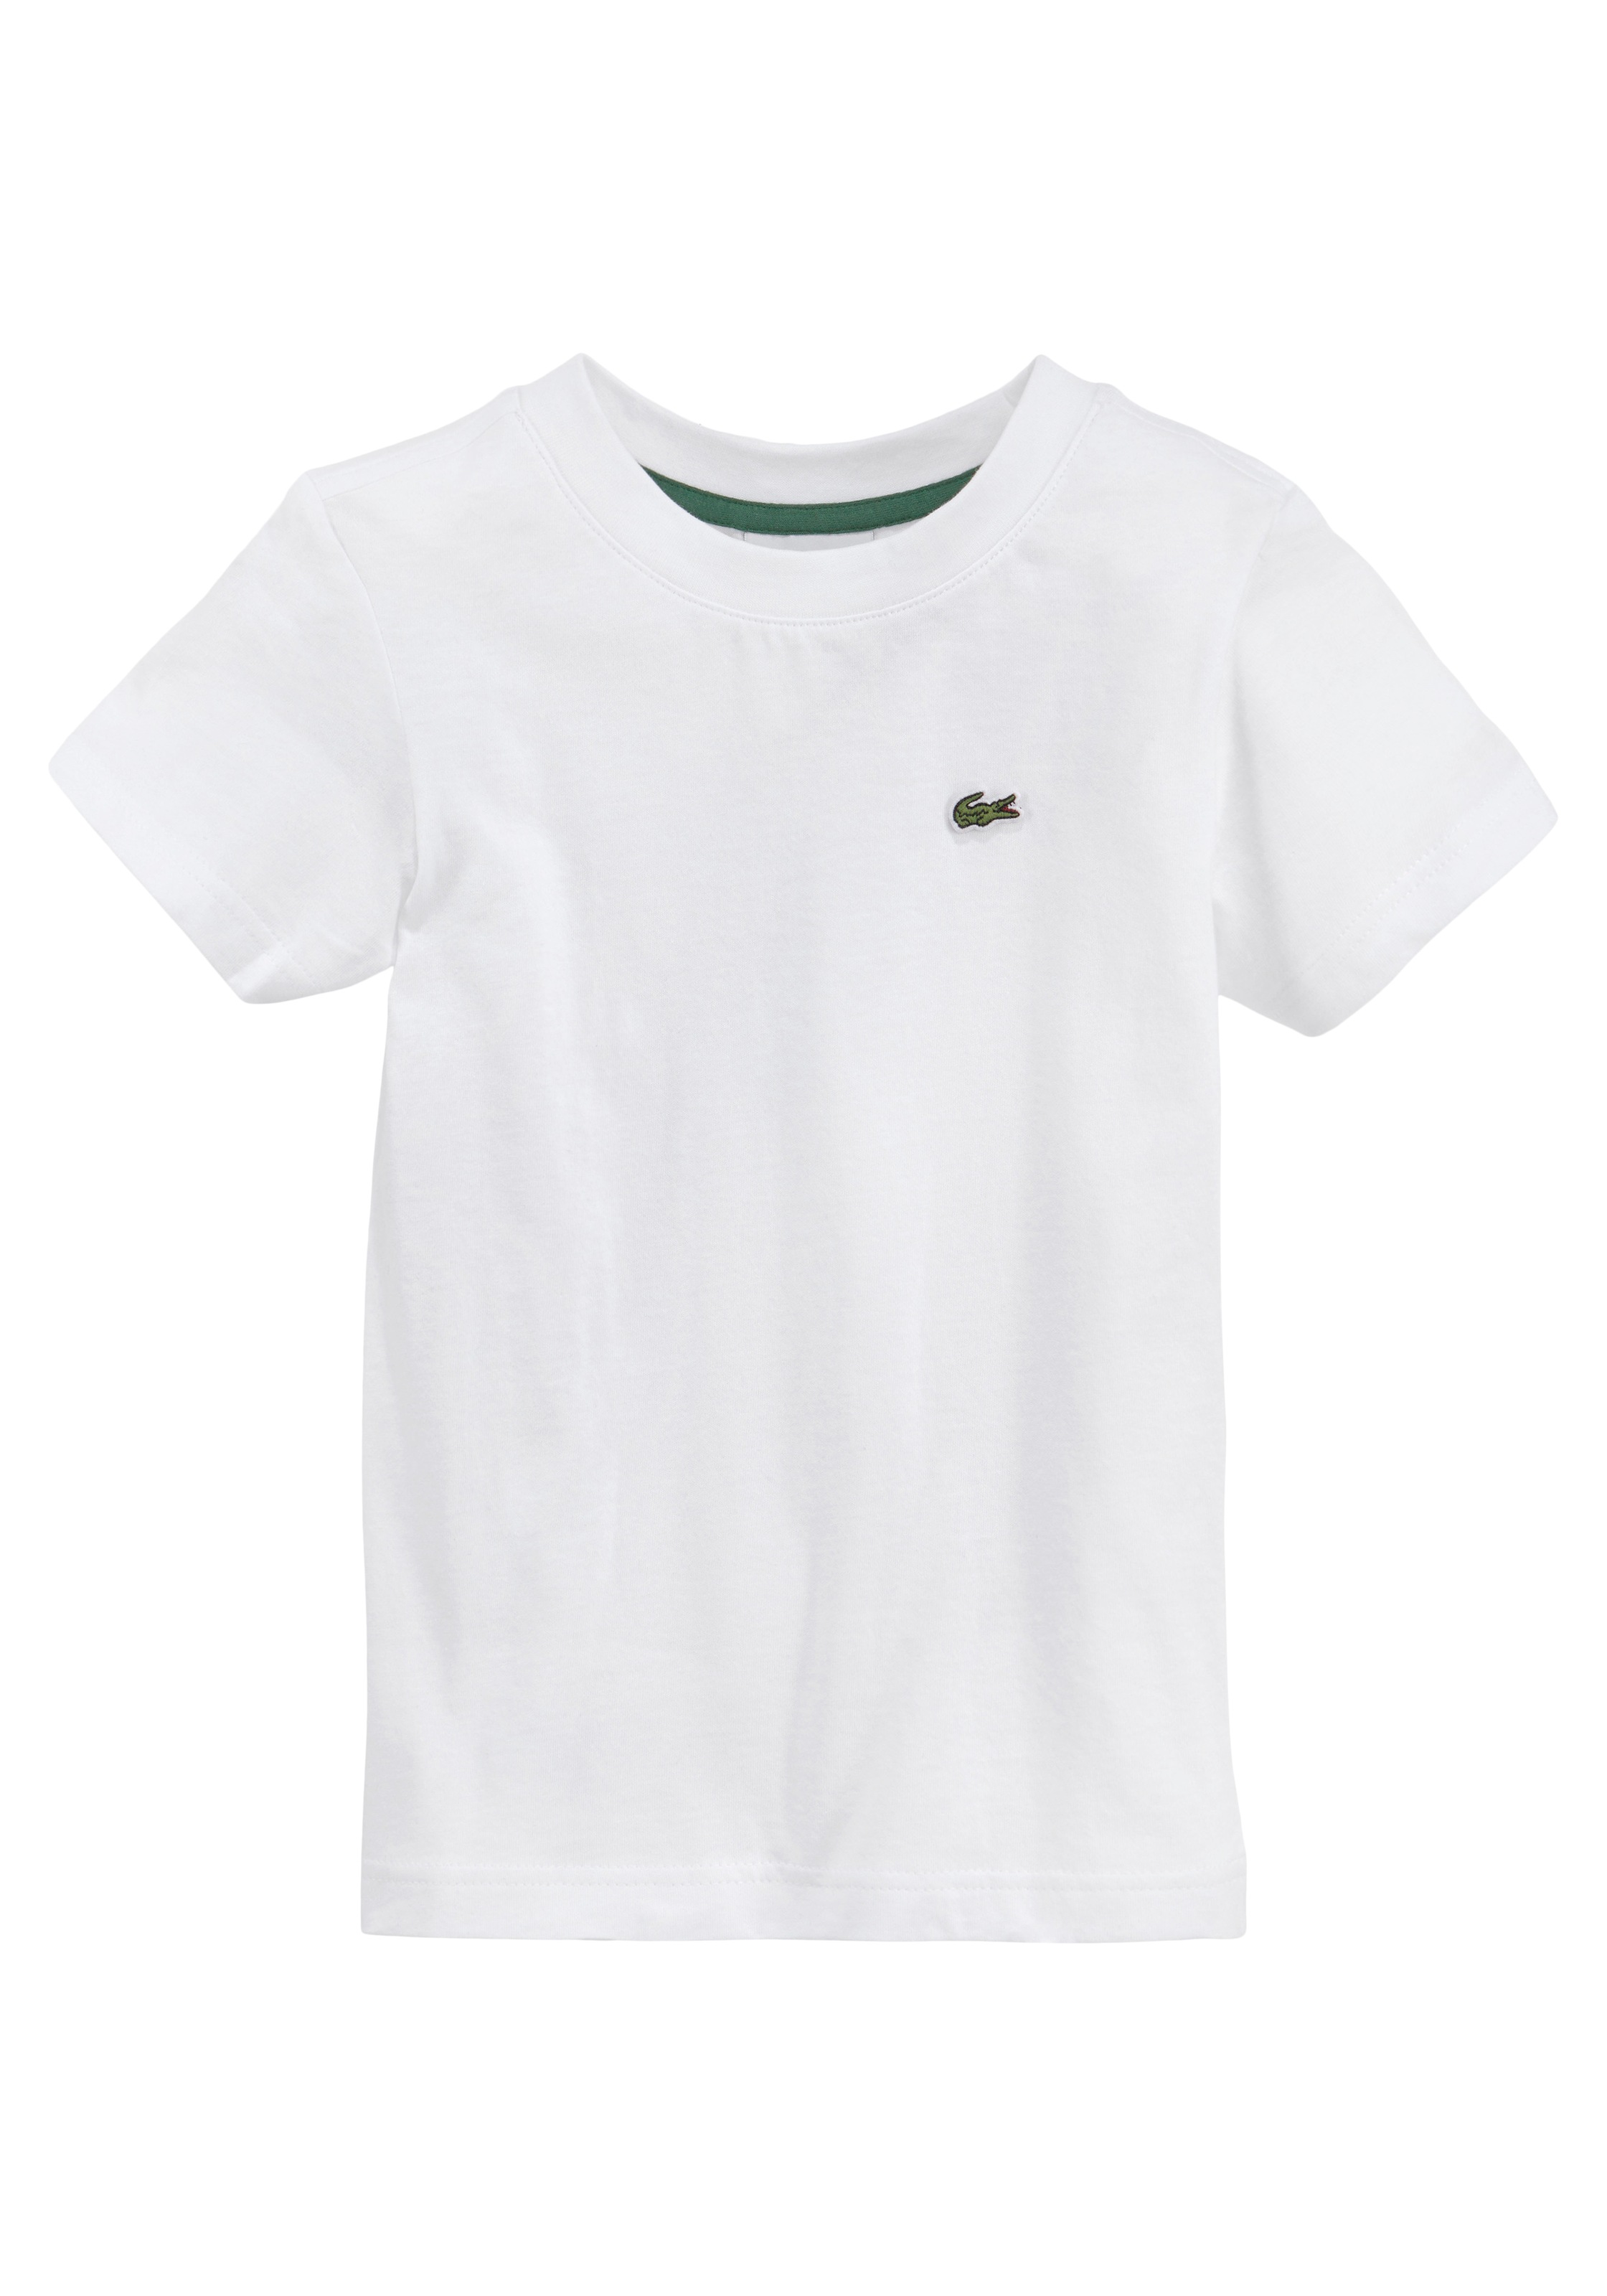 Lacoste T-Shirt, mit Lacoste-Krokodil auf Brusthöhe